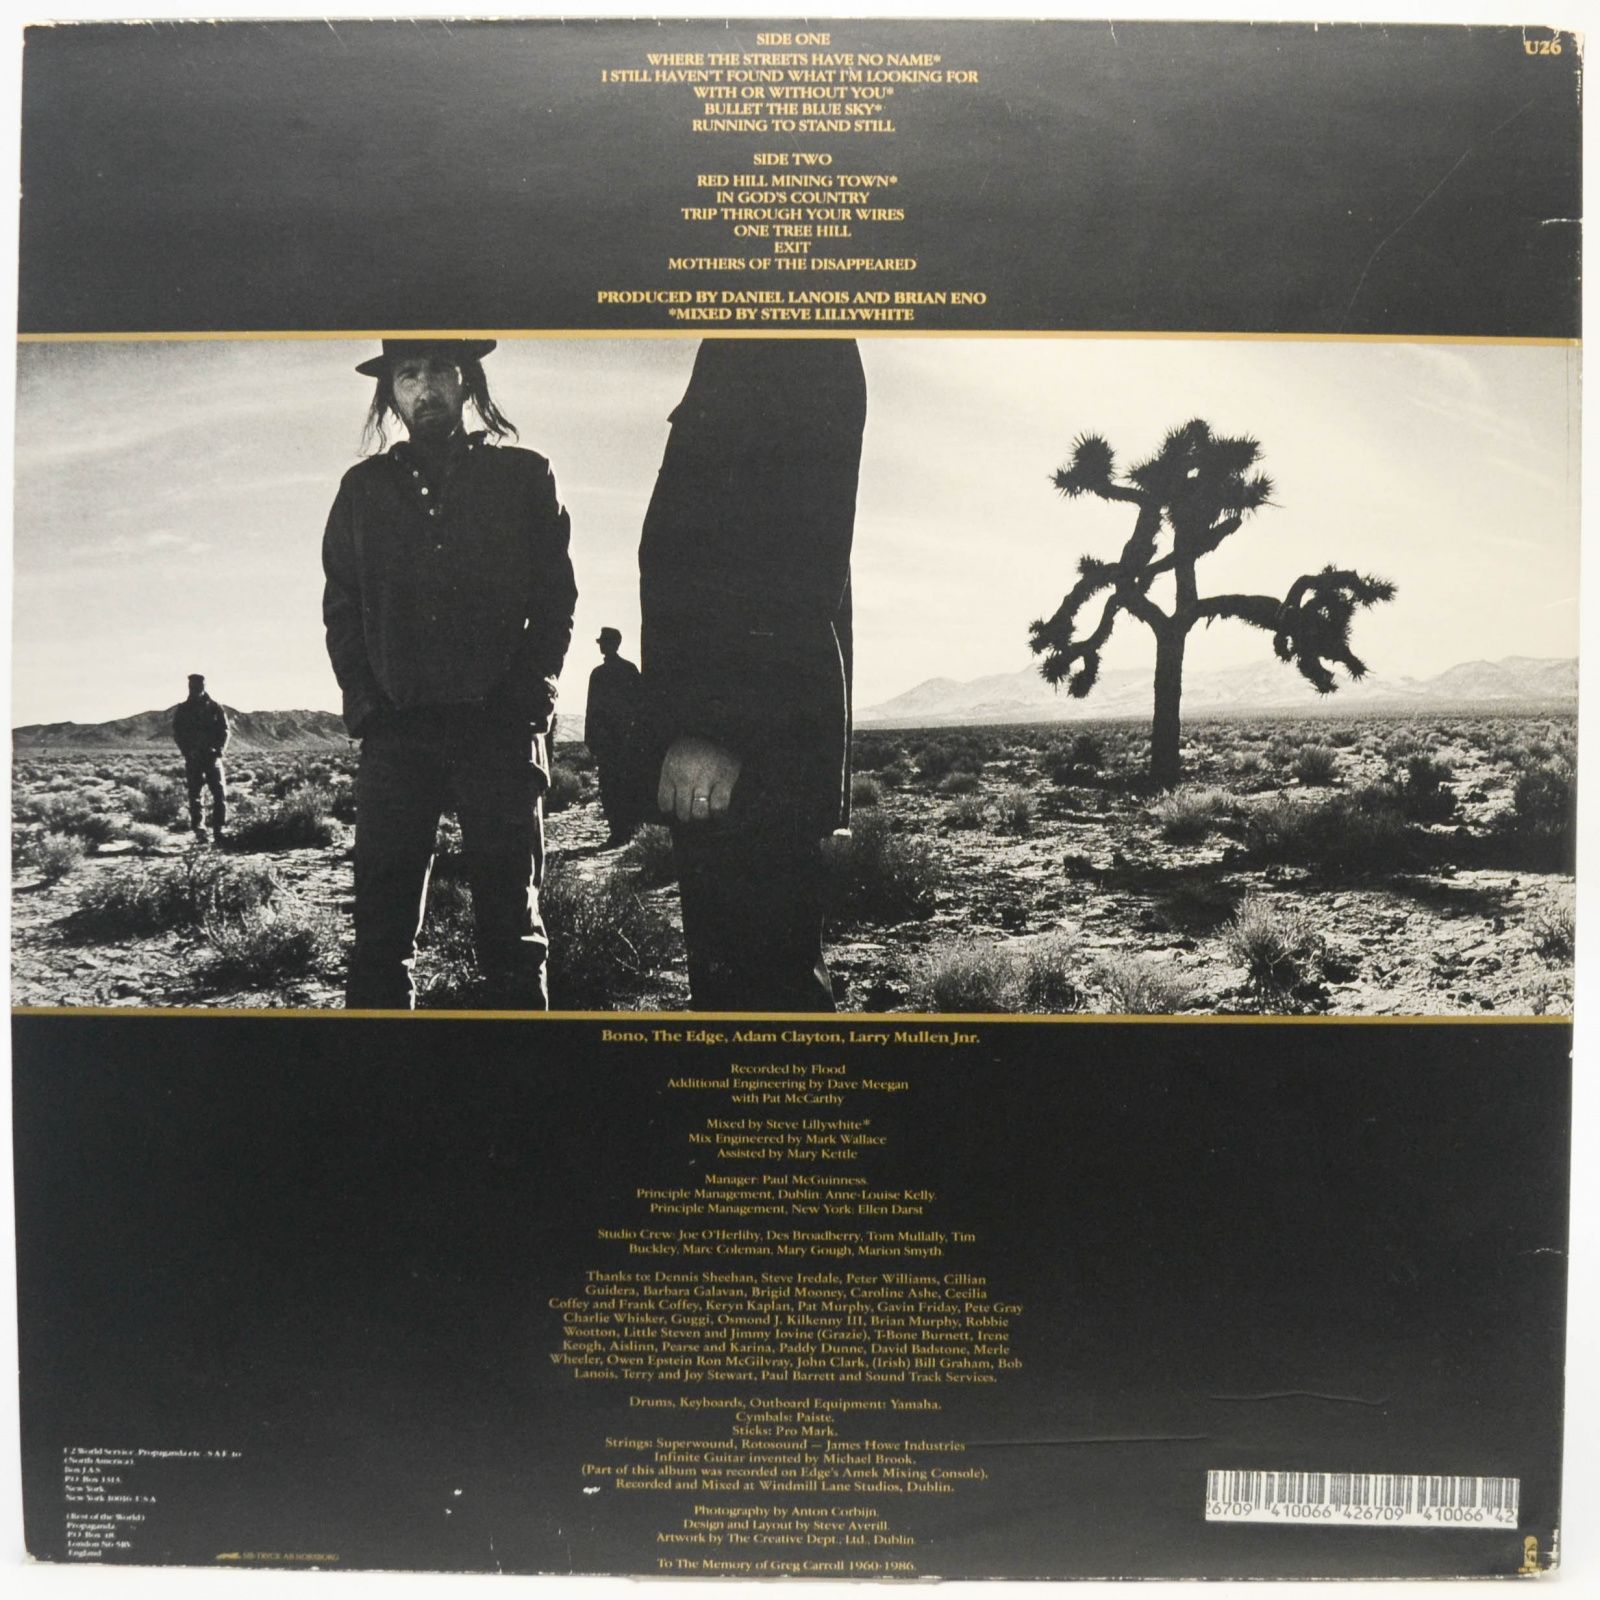 U2 — The Joshua Tree, 1987